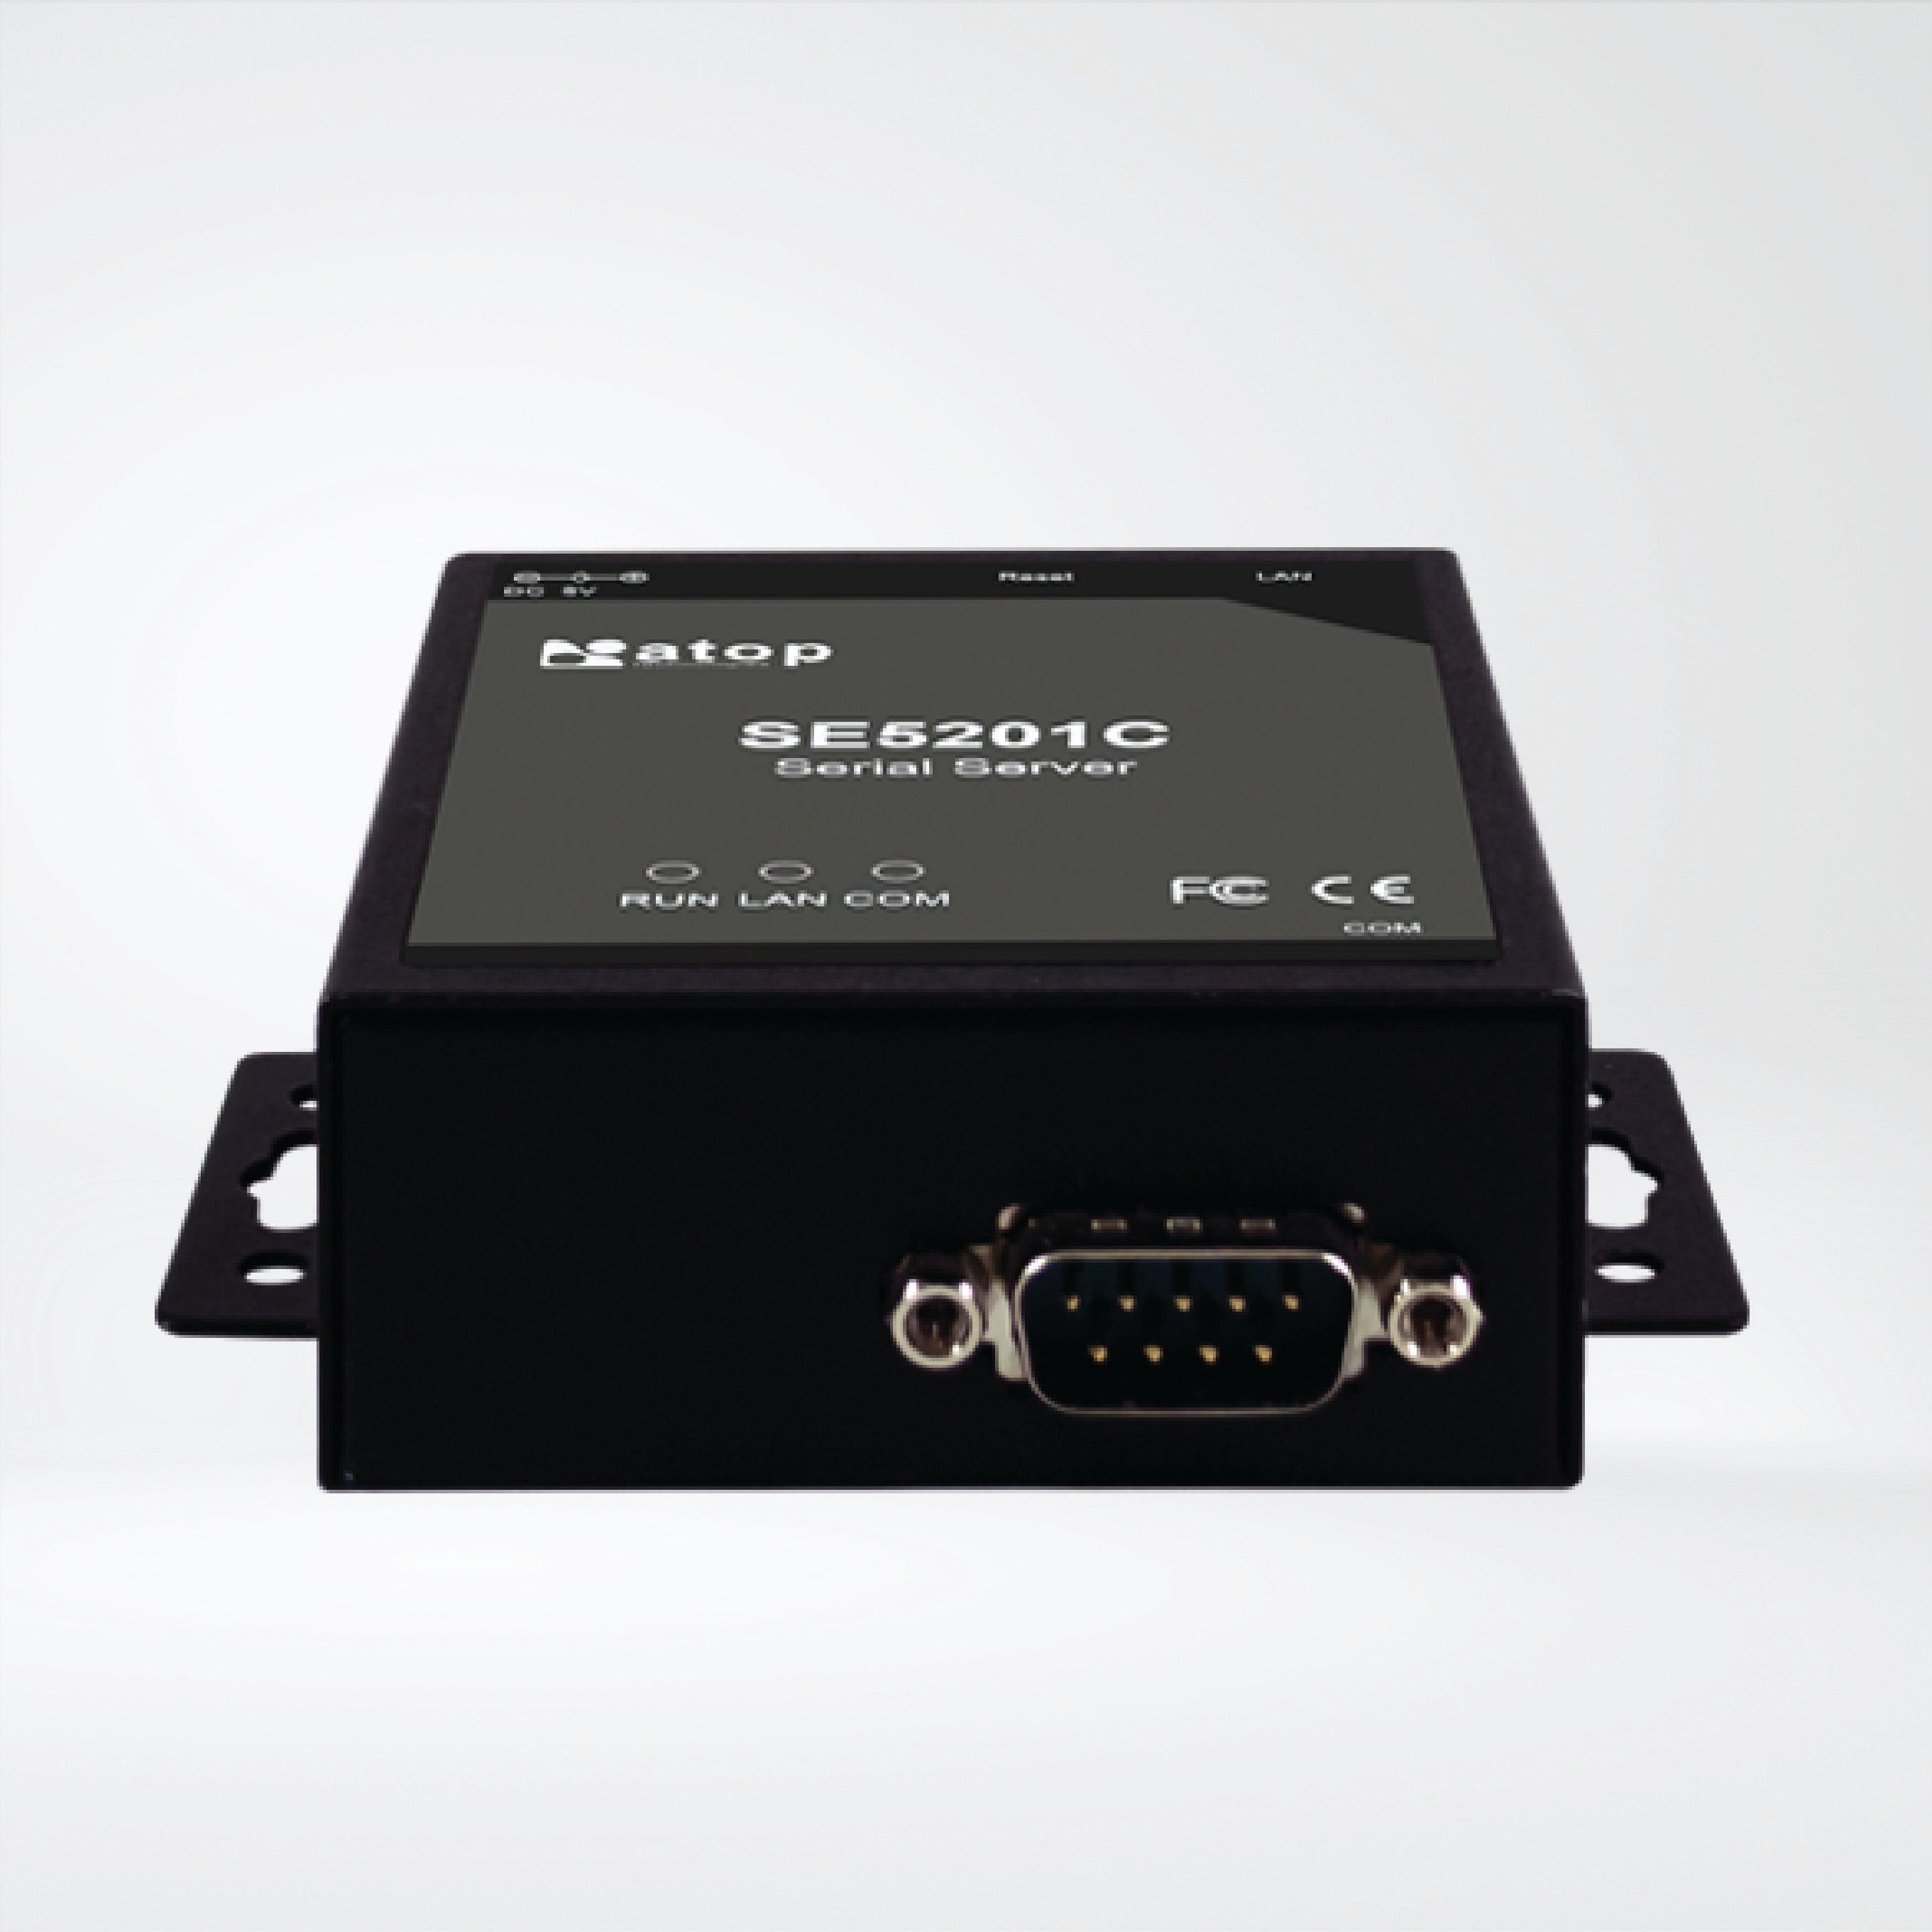 SE5201C-DB Semi-Industrial Serial Device Server - Riverplus